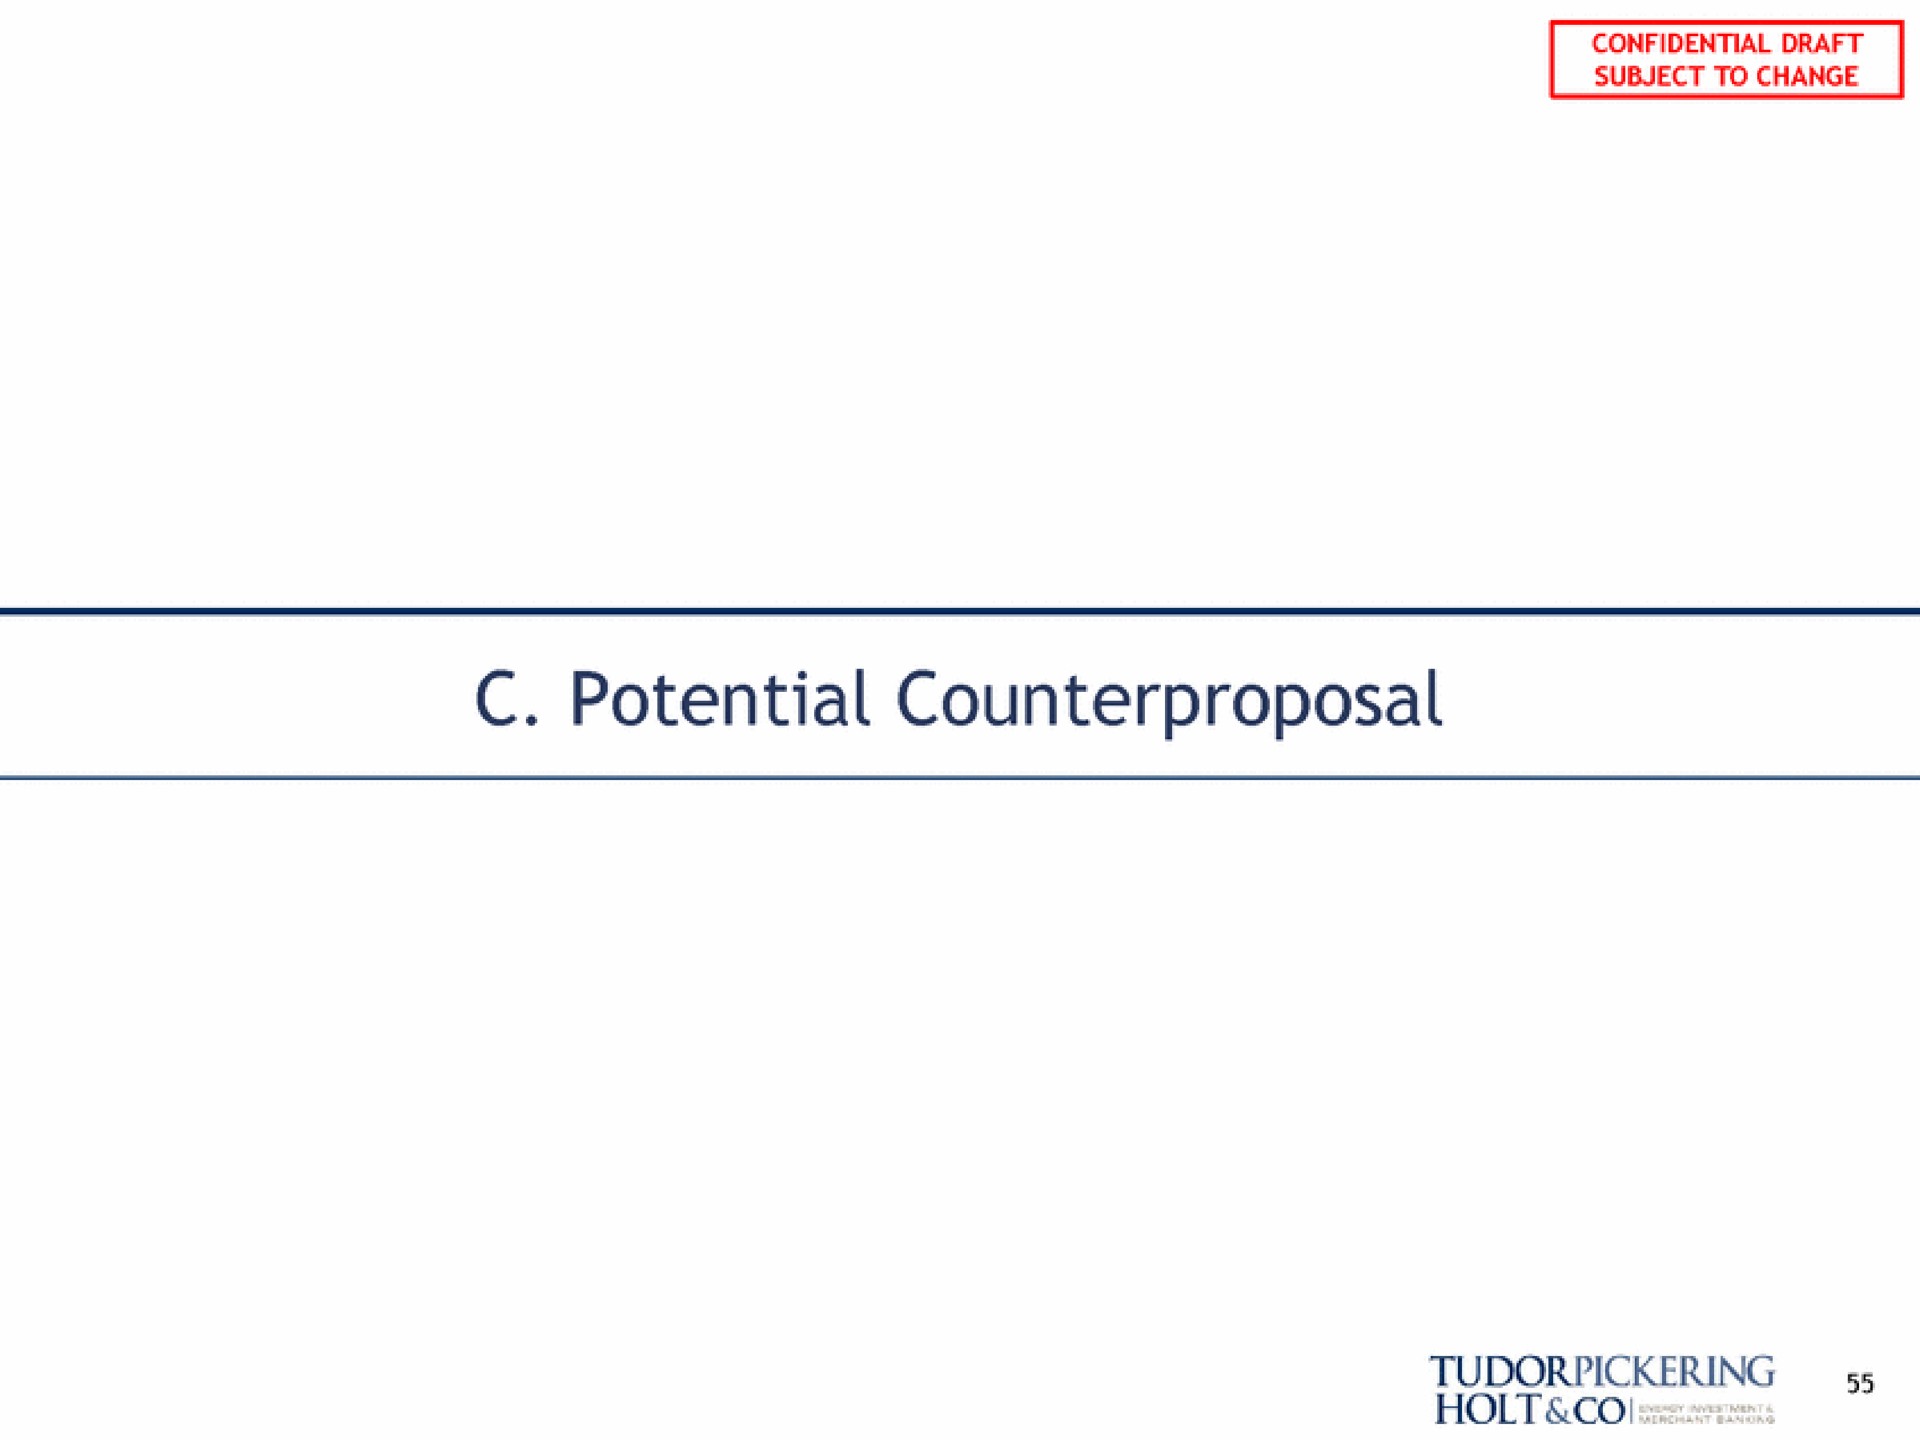 potential counterproposal | Tudor, Pickering, Holt & Co